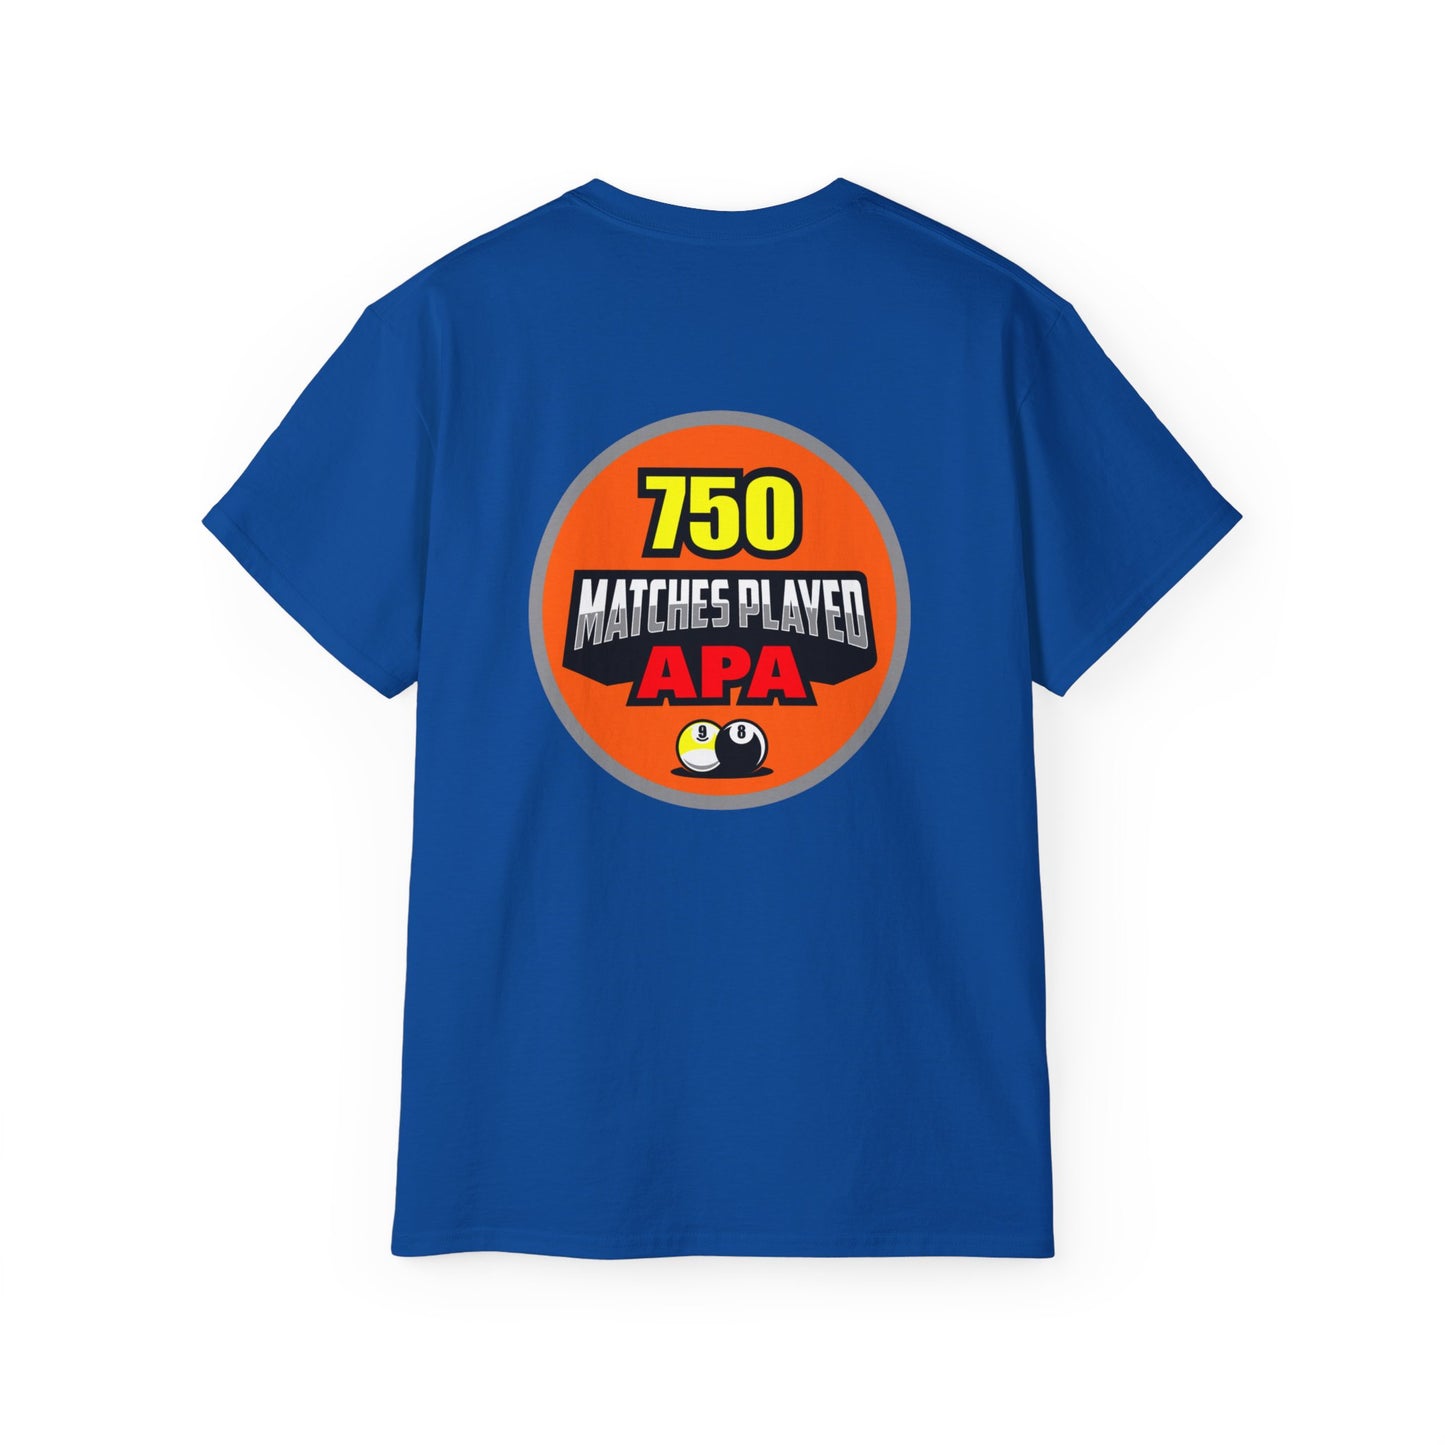 750 Matches Played T-Shirt